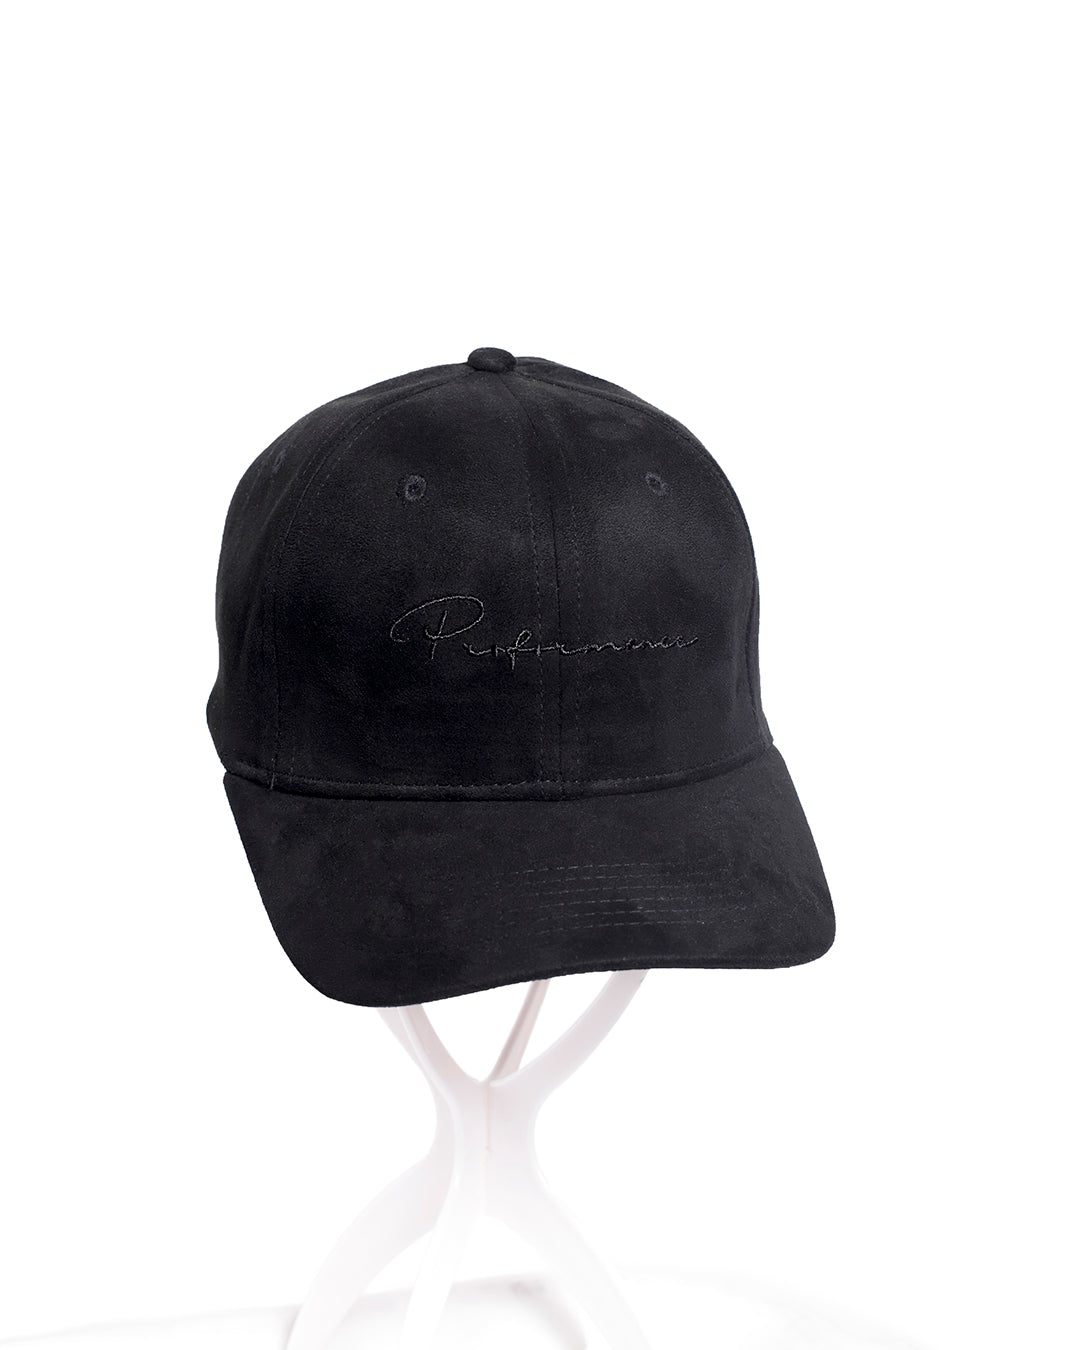 Black Proformance Hat